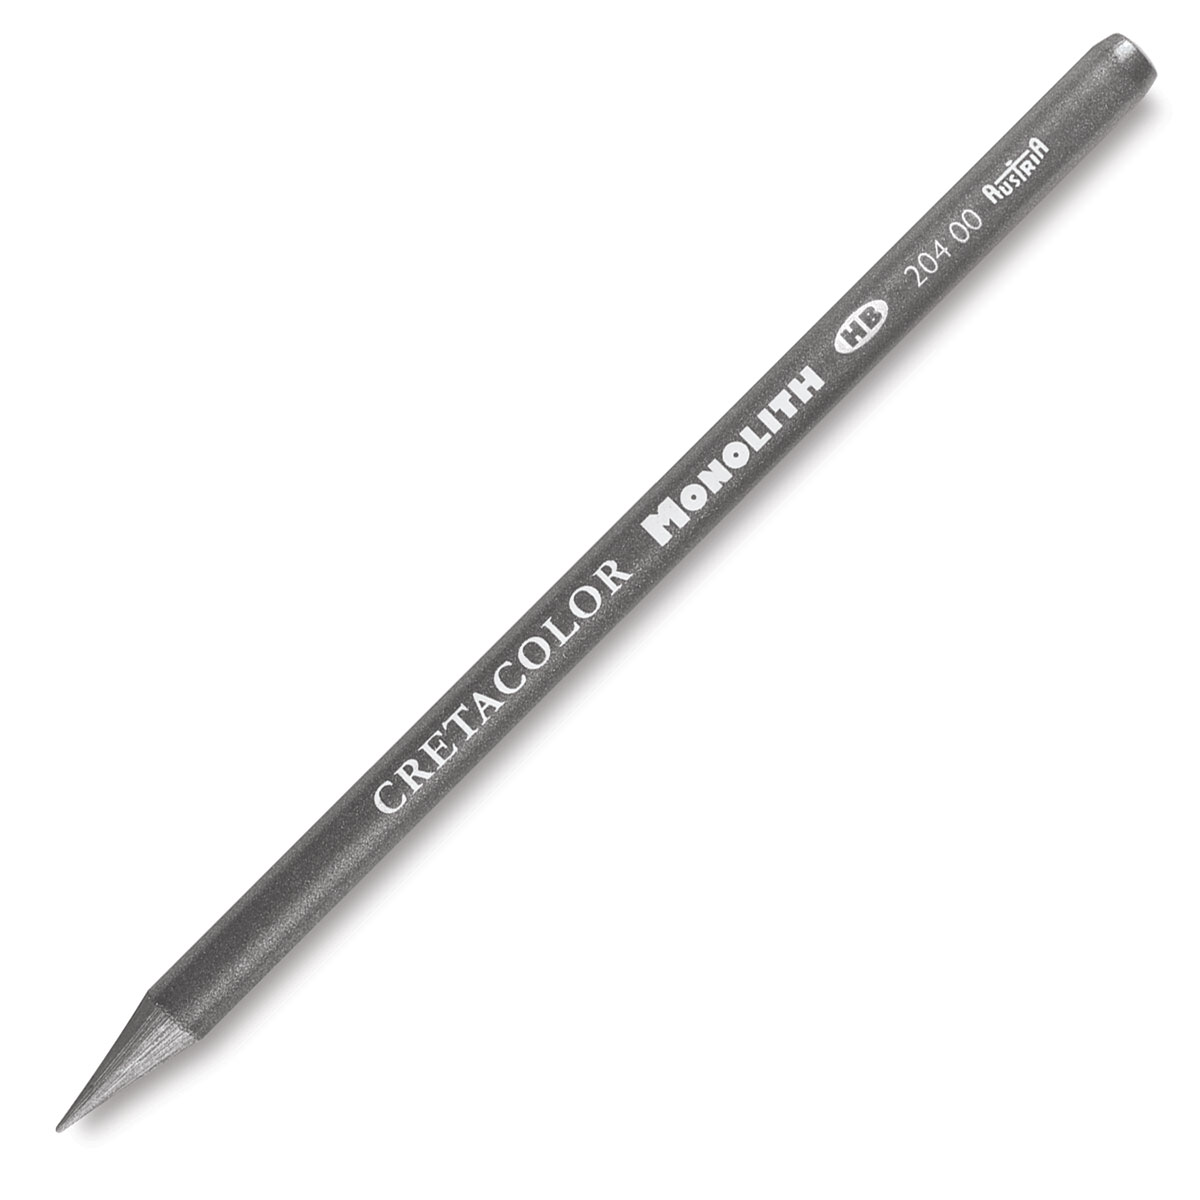 sinoart woodless graphite pencil set-monolith-non-wood graphite